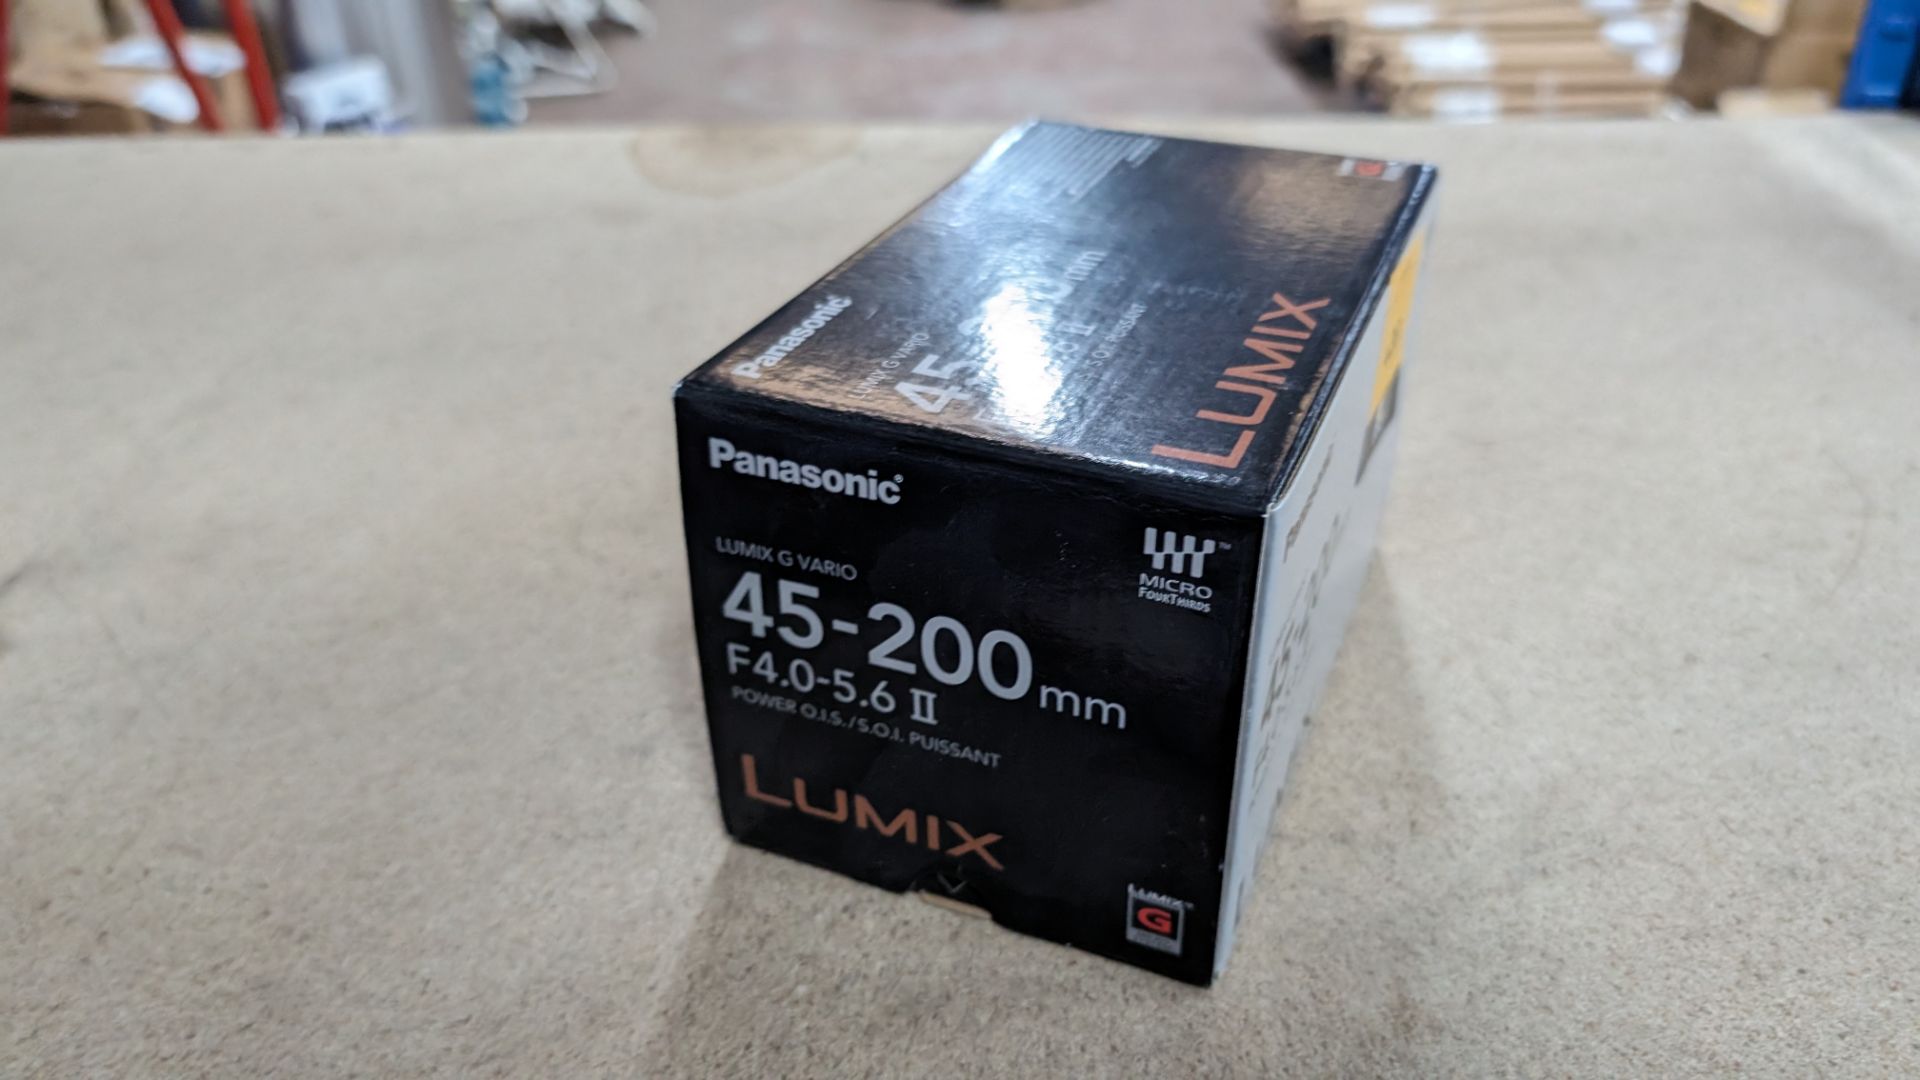 Panasonic Lumix G Vario 45-200mm lens, model H-FSA45200, f4.0-5.6 II - Bild 6 aus 6